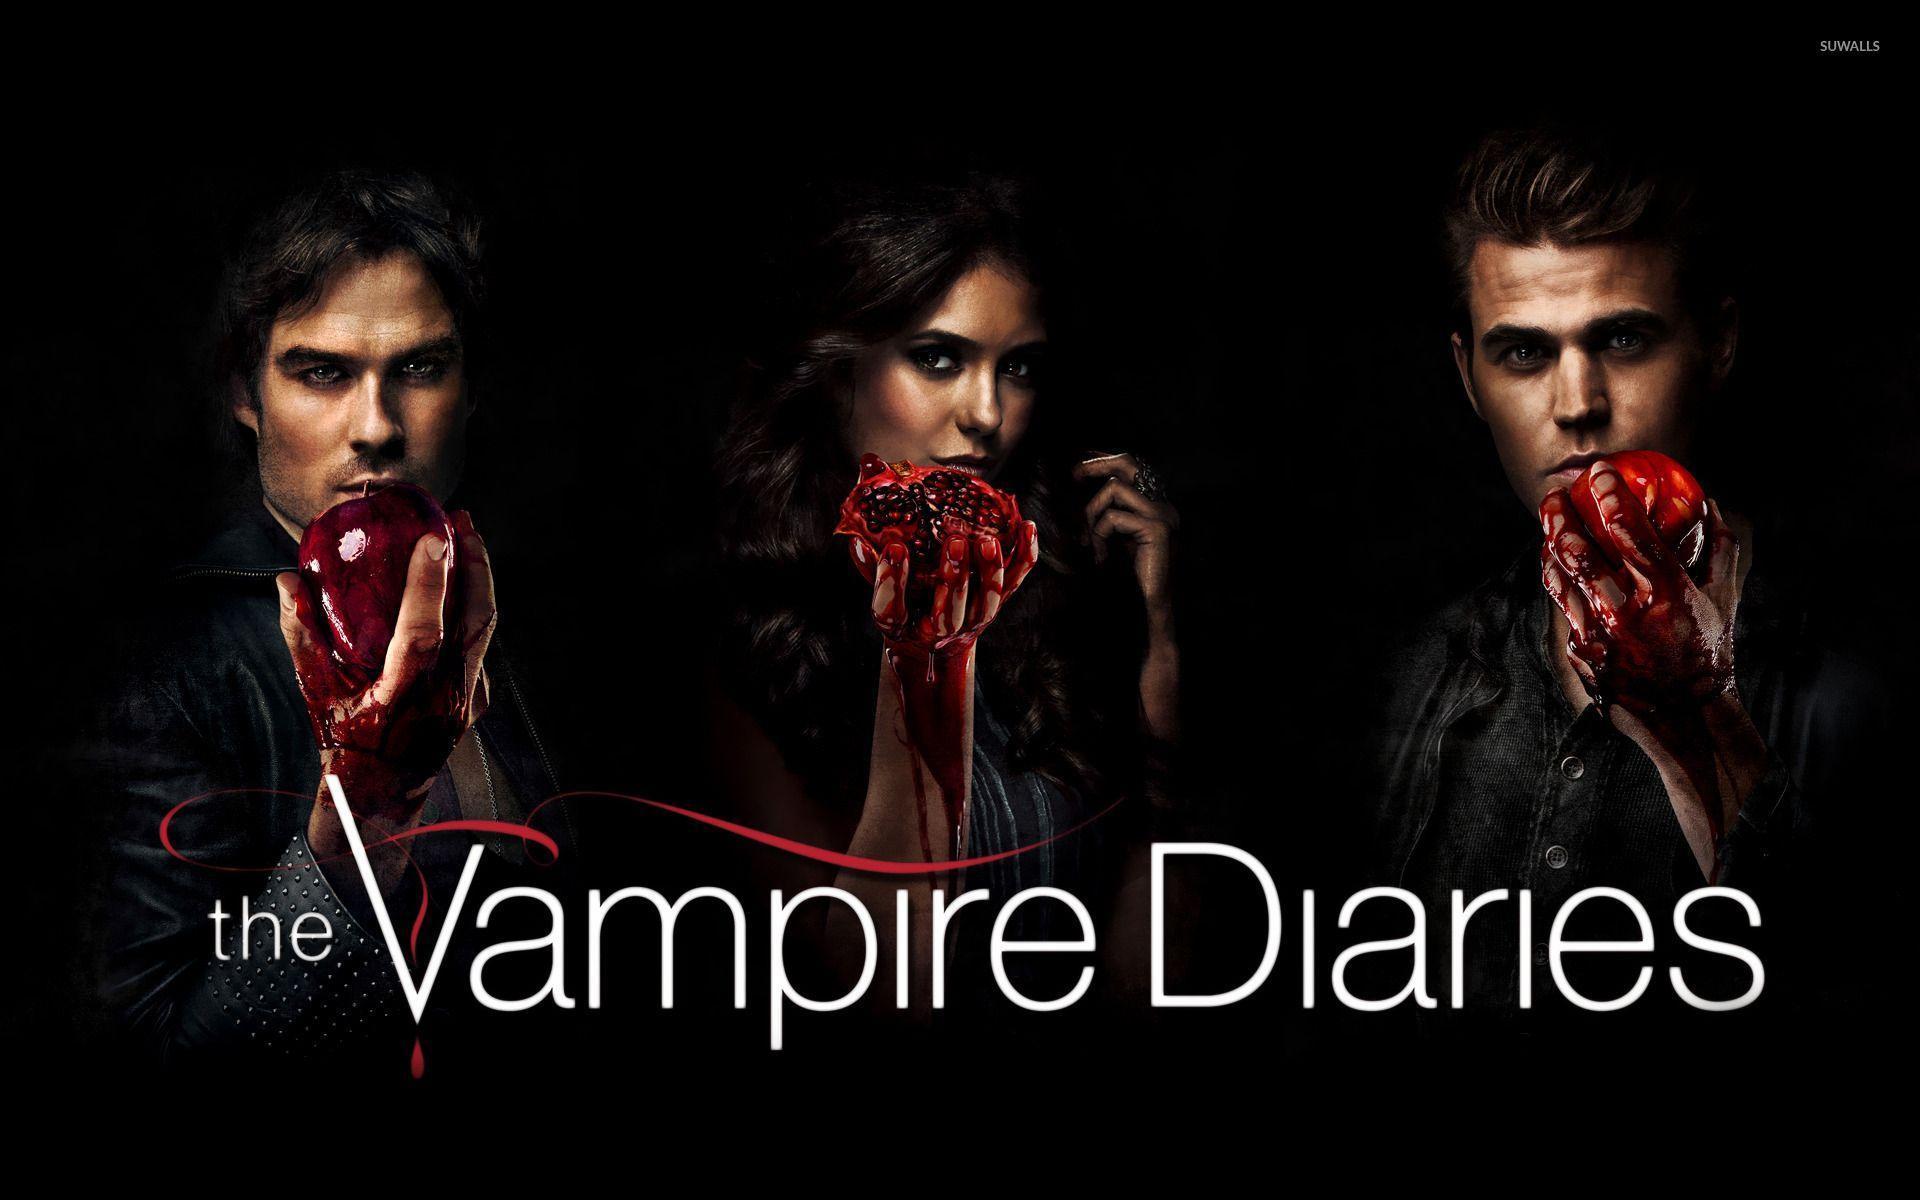 The Vampire Diaries [10] wallpaper Show wallpaper